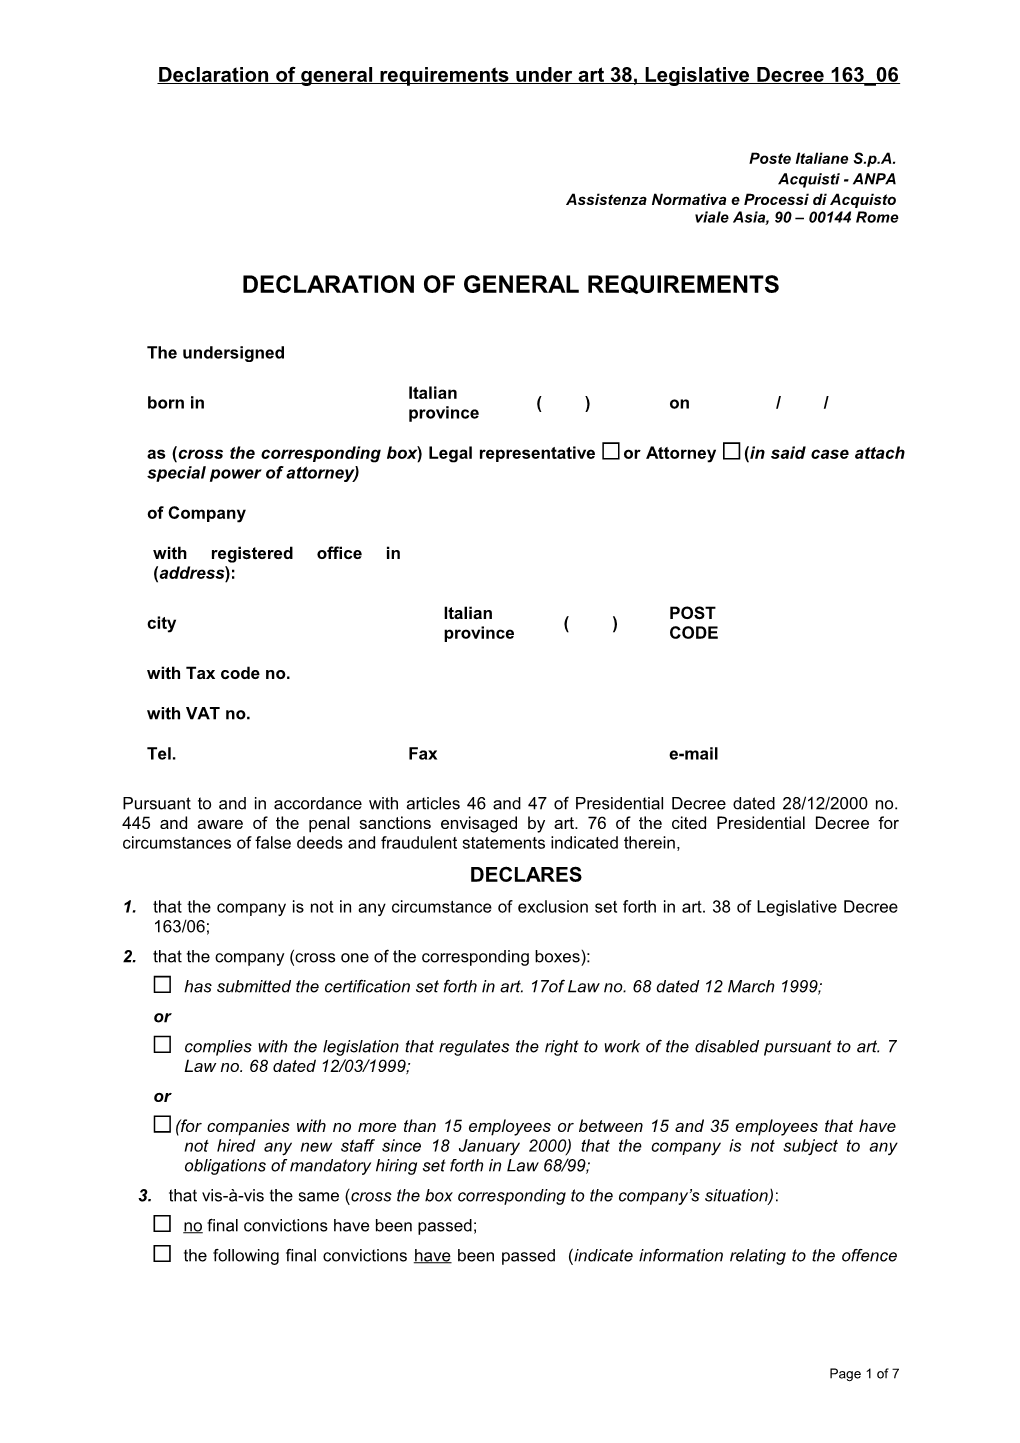 Declaration of General Requirements Under Art 38, Legislative Decree 163 06